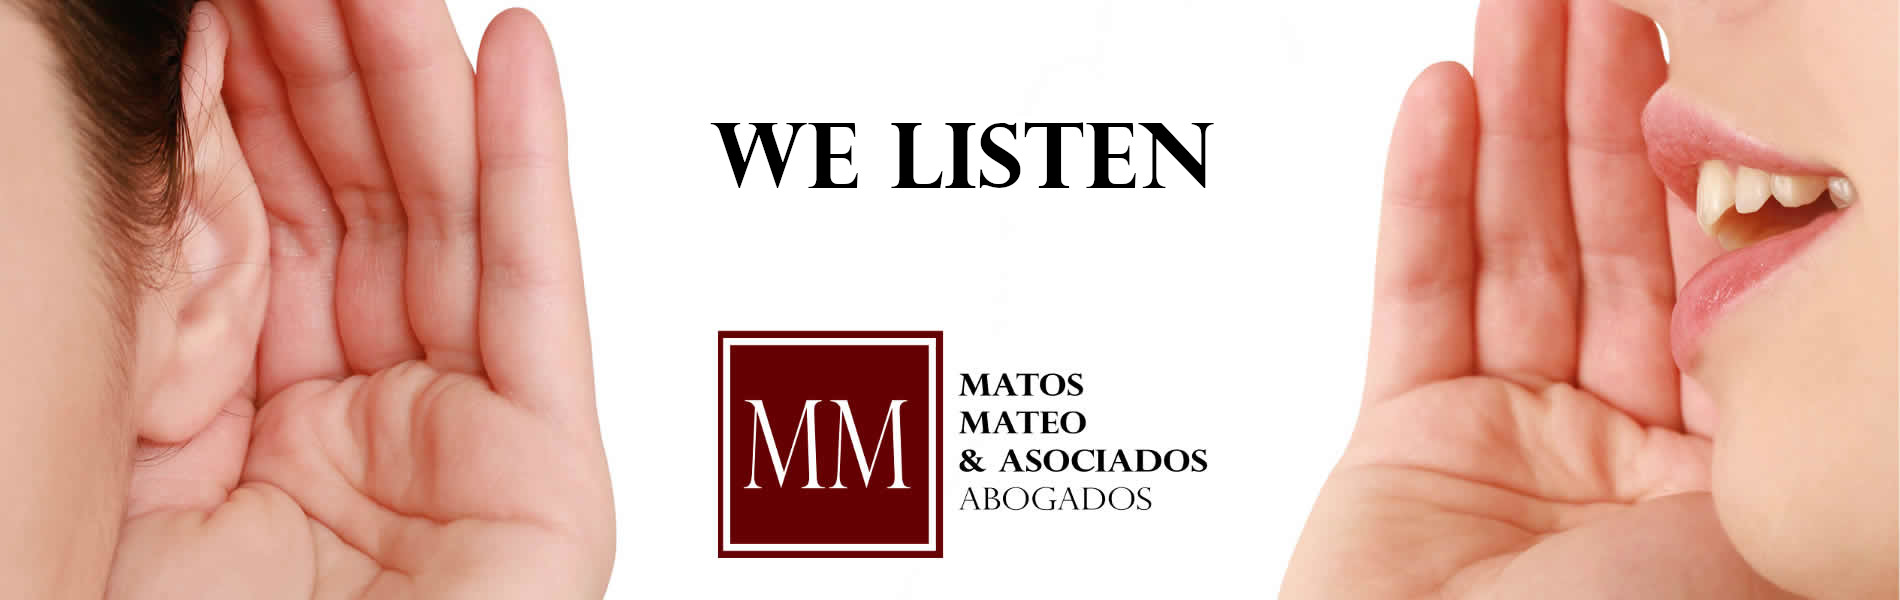 Matos Mateo Law Listen